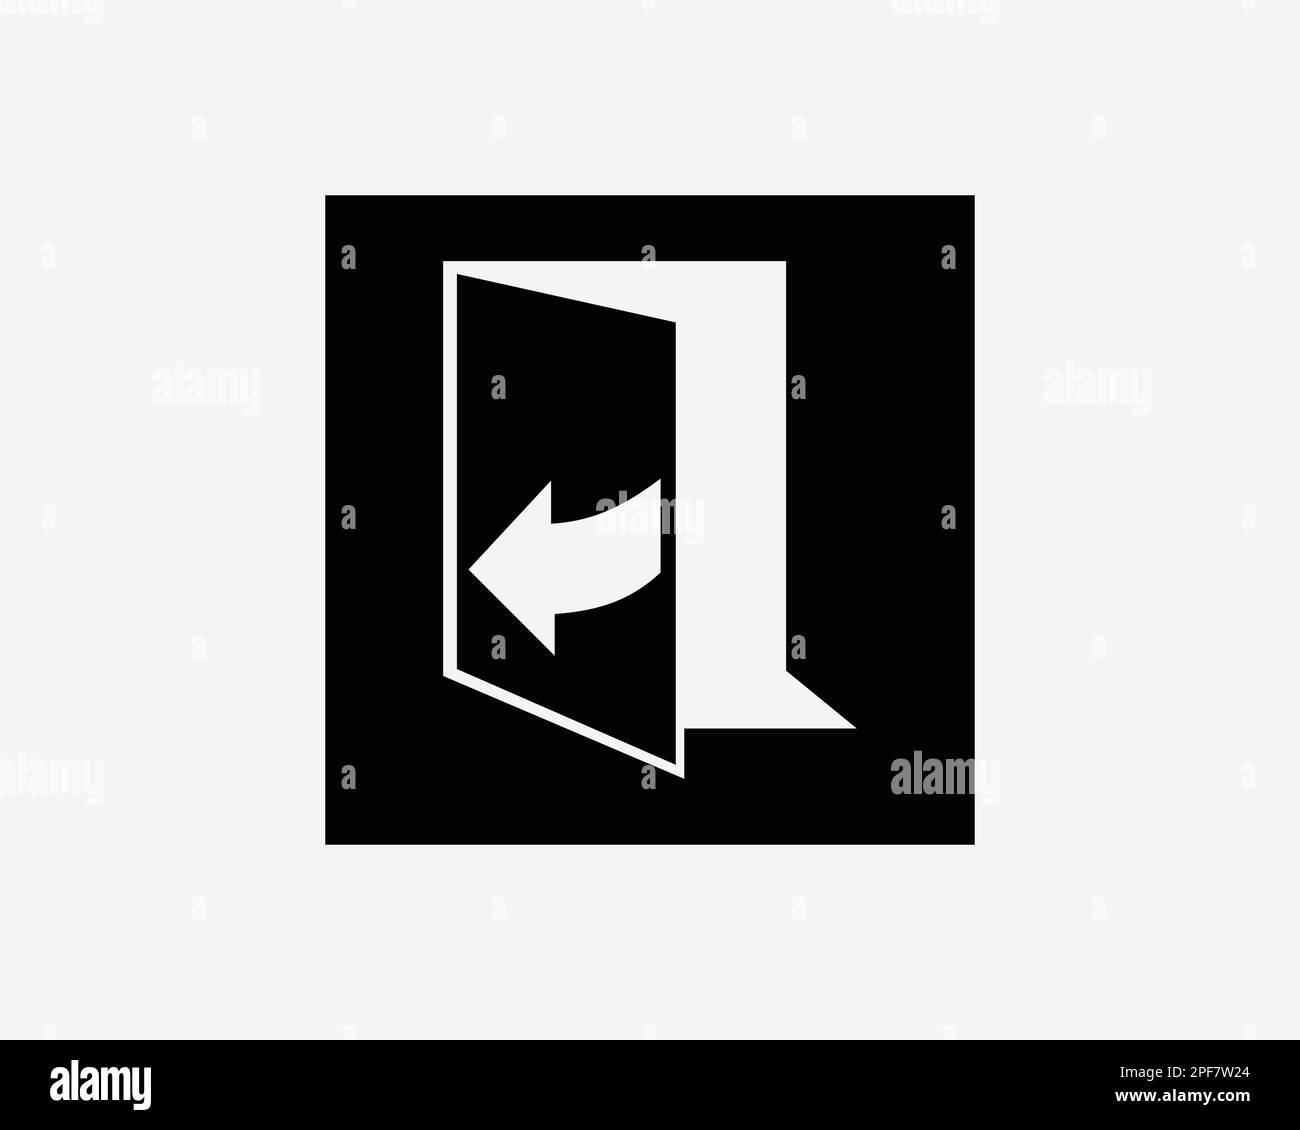 Türzug Öffnen Links Ausgang Eingang Beschilderung Schwarzweiß Silhouettenzeichen Symbol Clipart Grafik Bildmaterial Piktogramm Illustration Vektor Stock Vektor